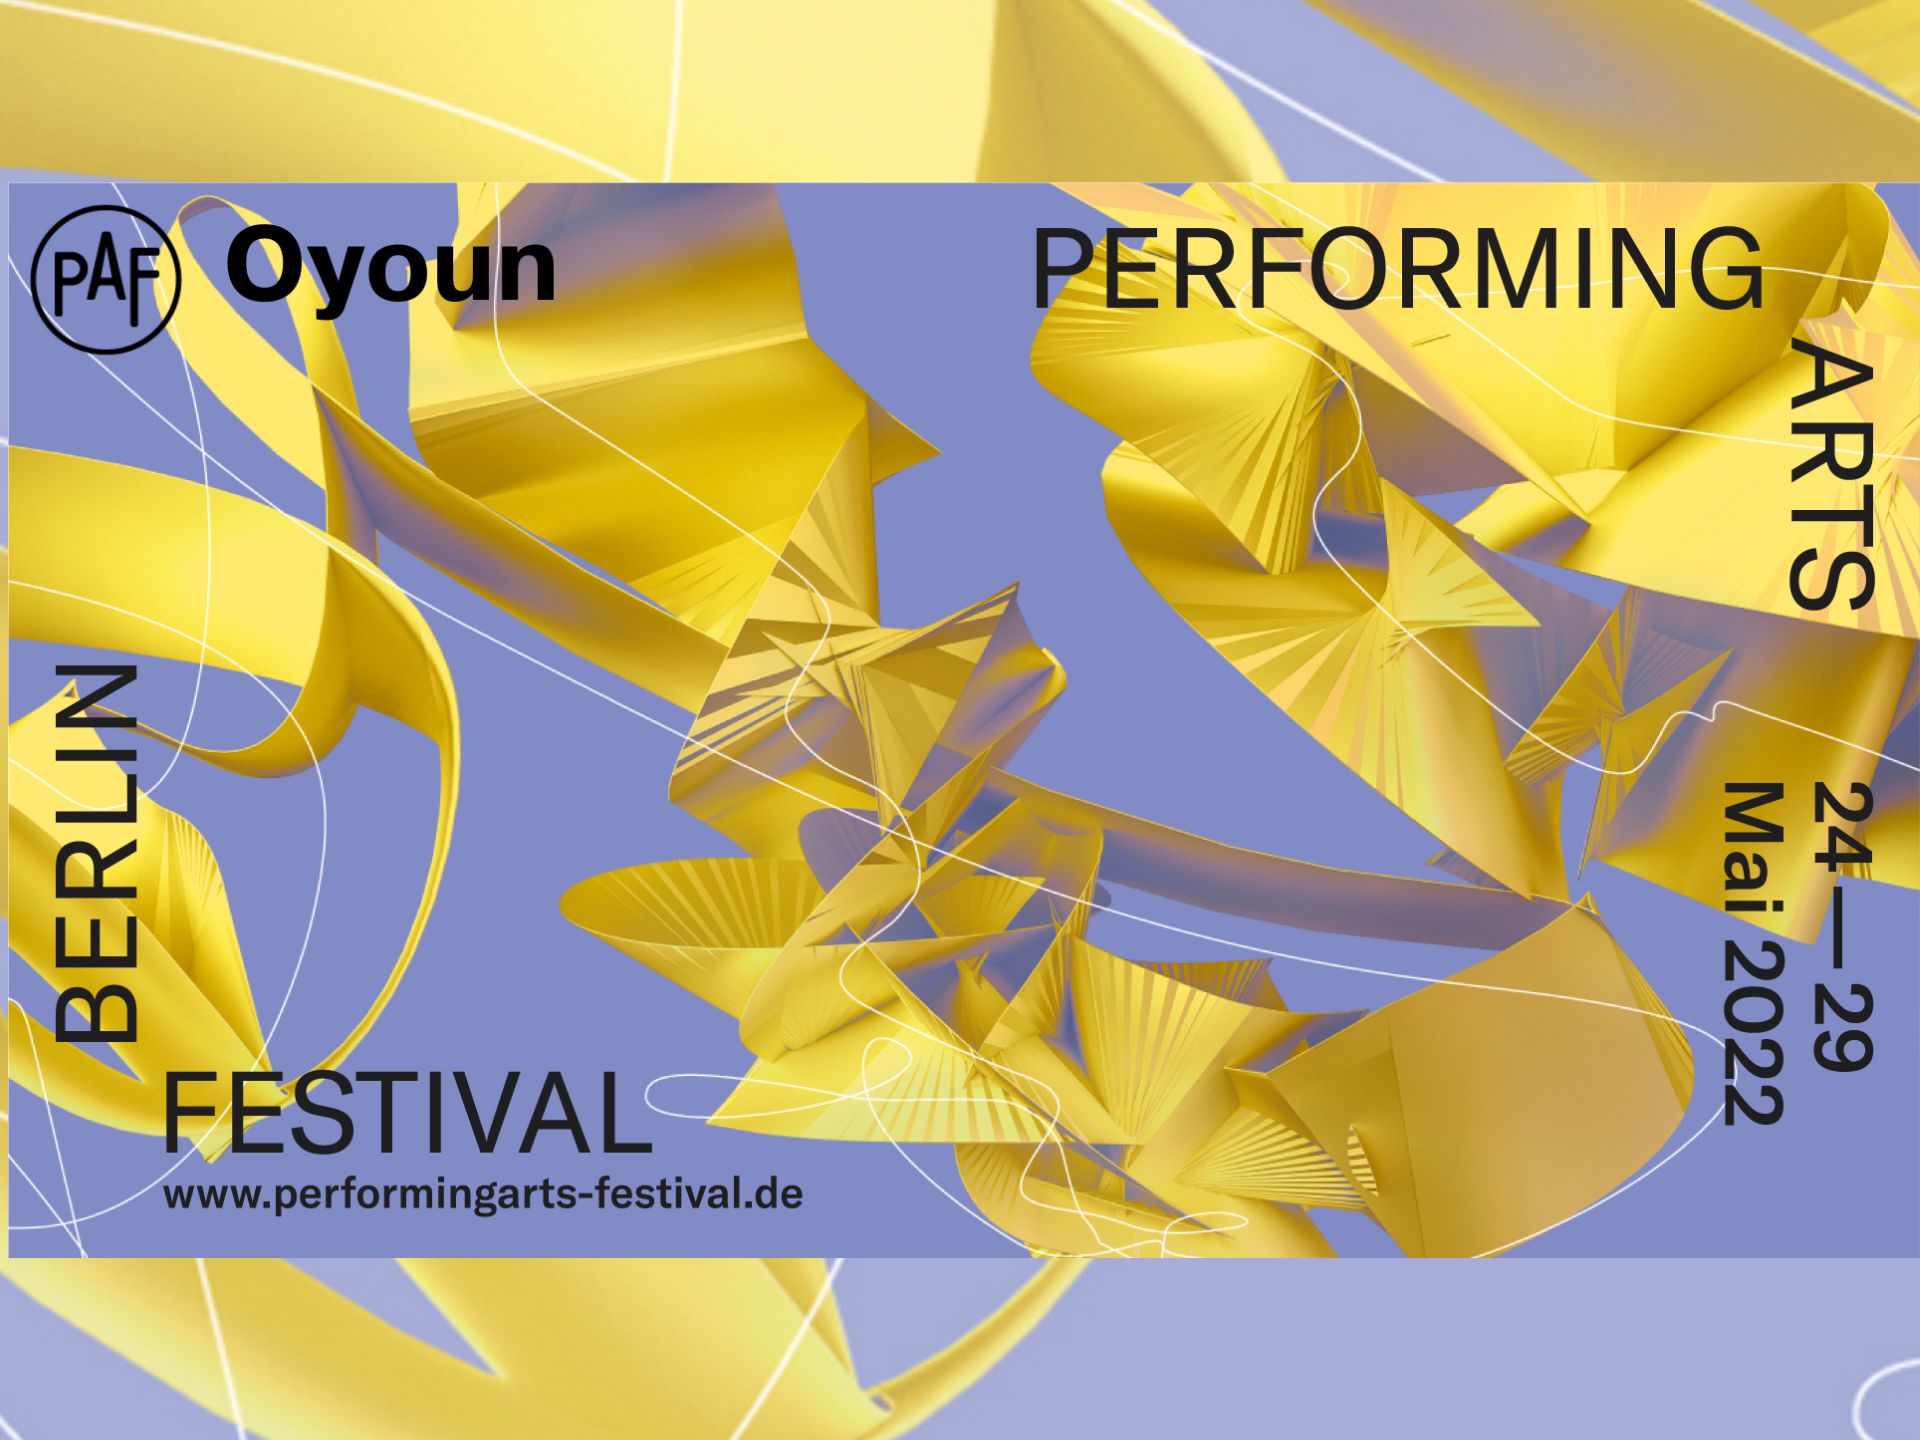 PERFORMING ARTS FESTIVAL | Festivalzentrum im Oyoun